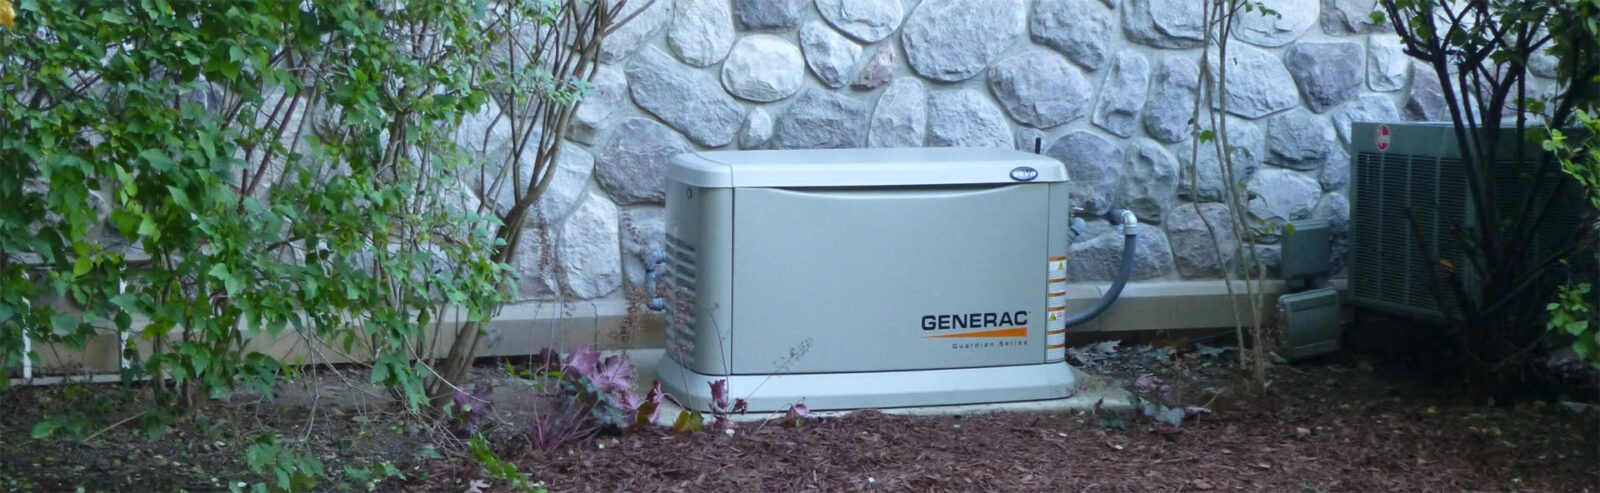 Action Air Conditioning & Heating - Generac Generators